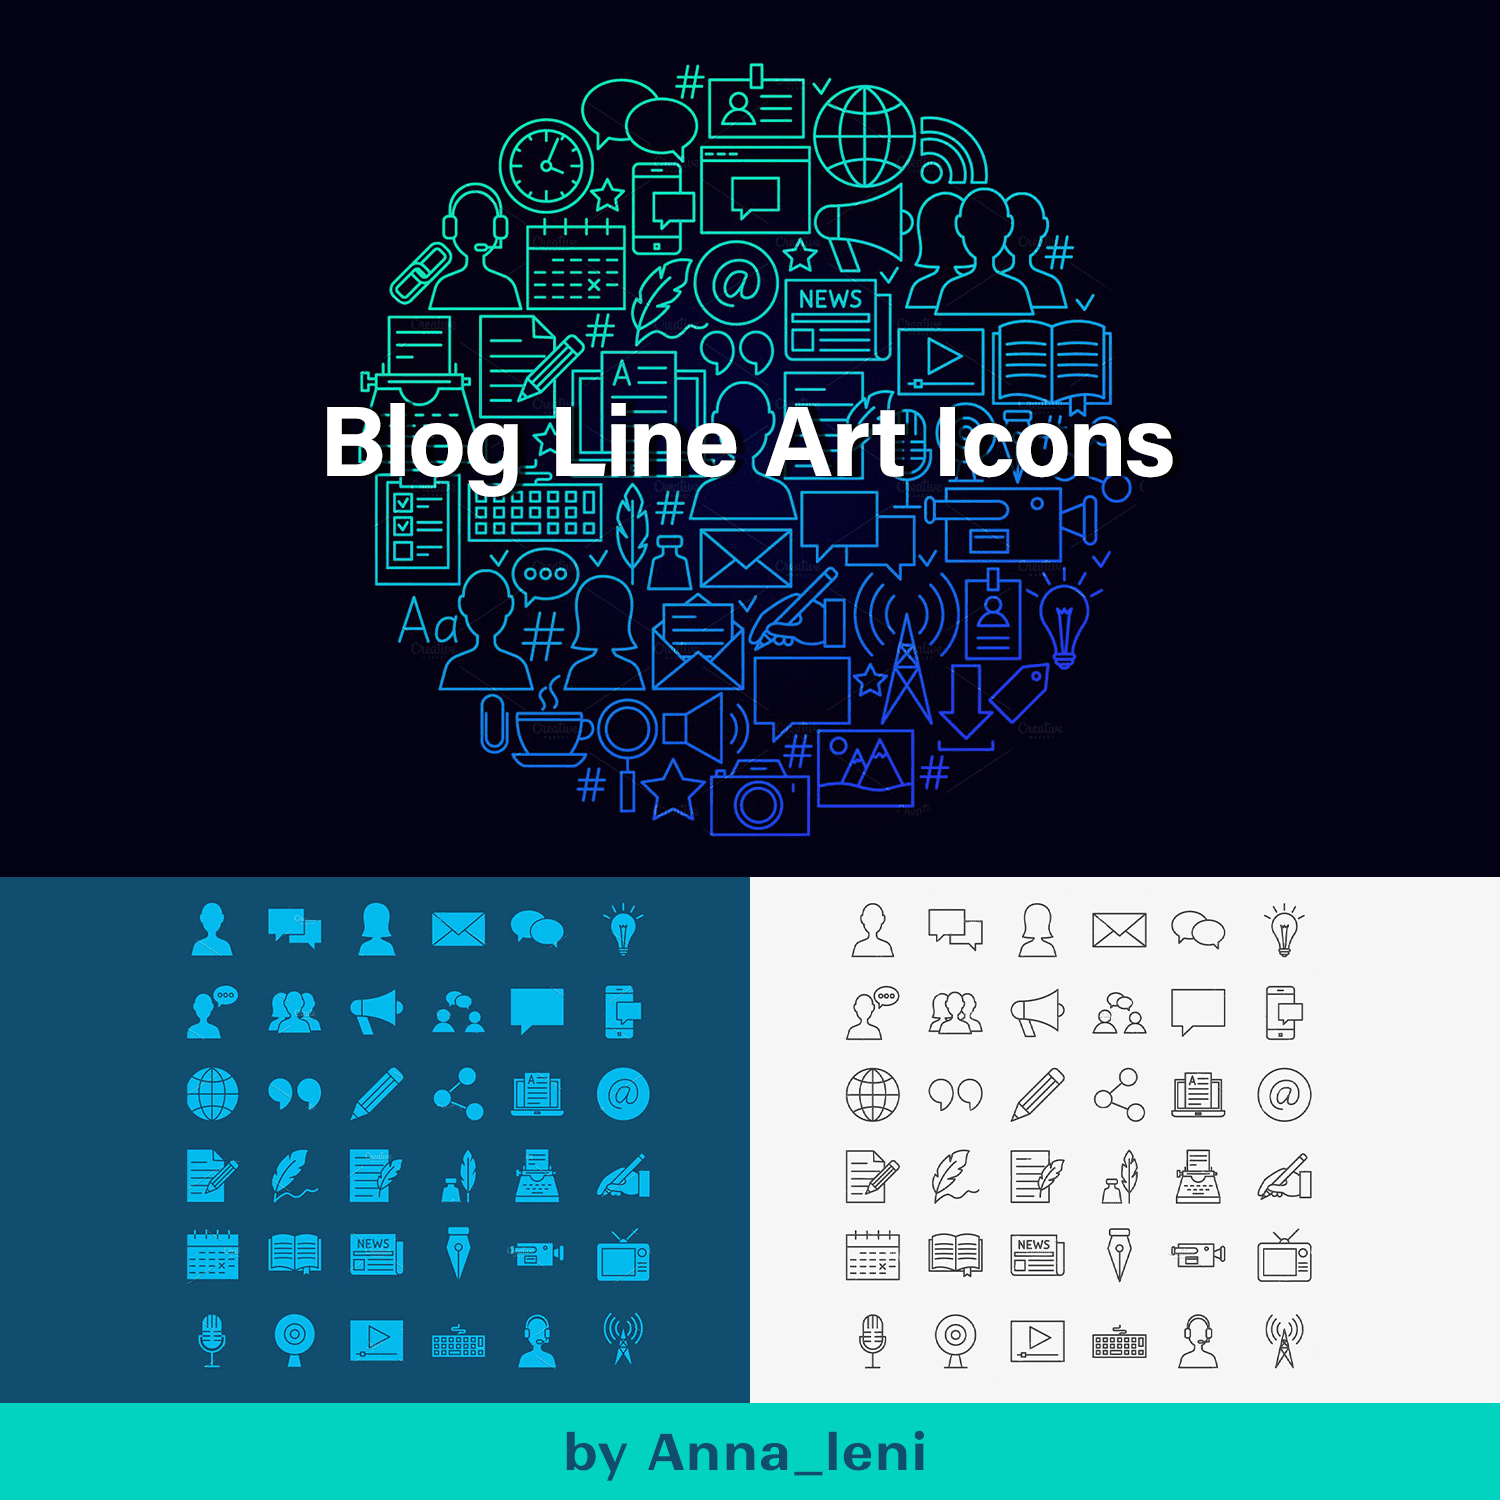 Blog Line Art Icons cover.